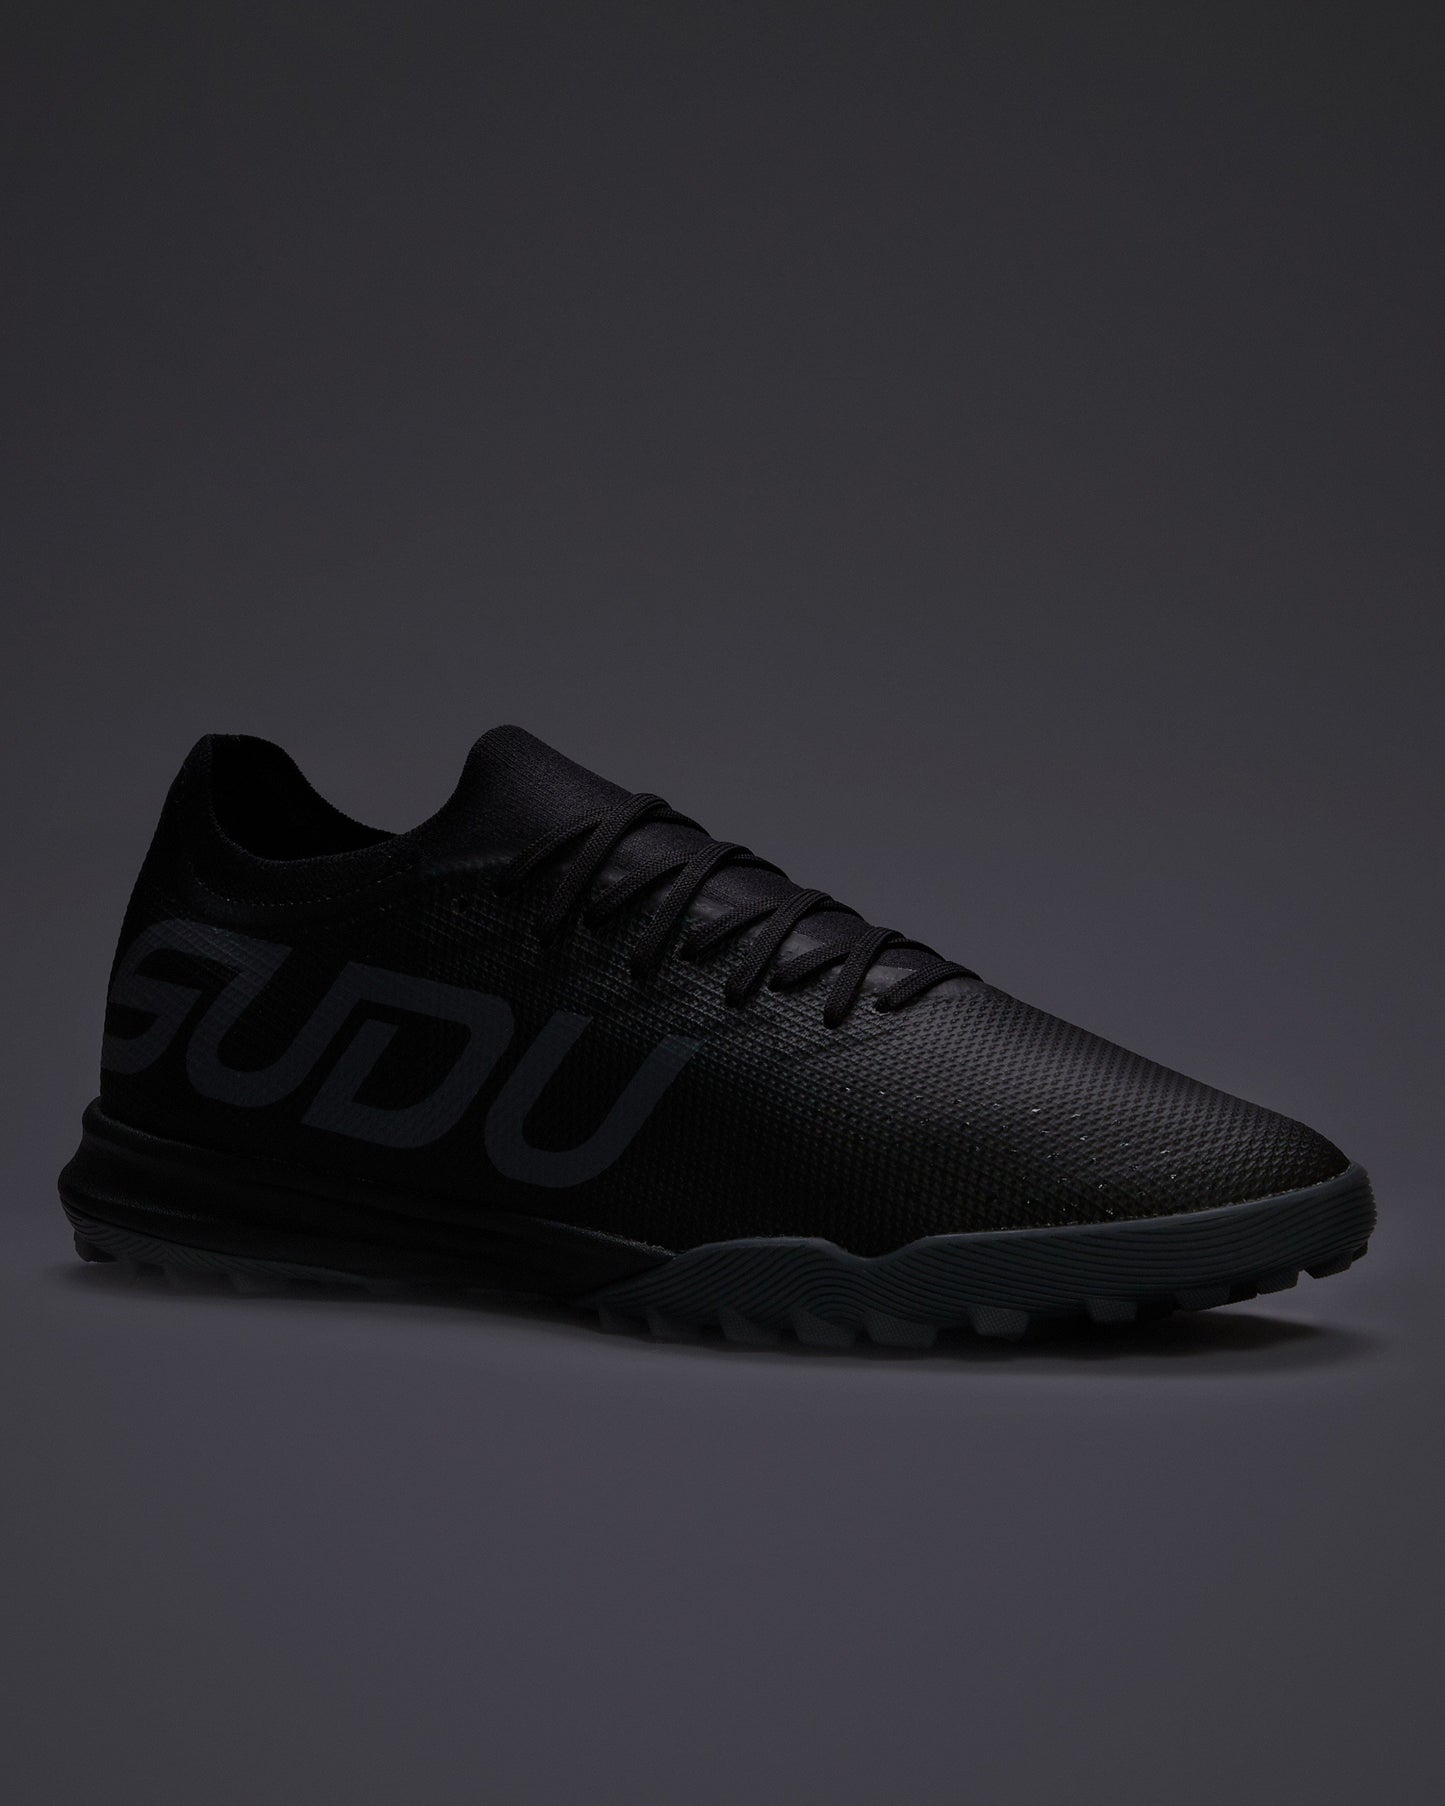 SUDU SFS TT 01 Turf - Black UK 6 Astroturf Shoe